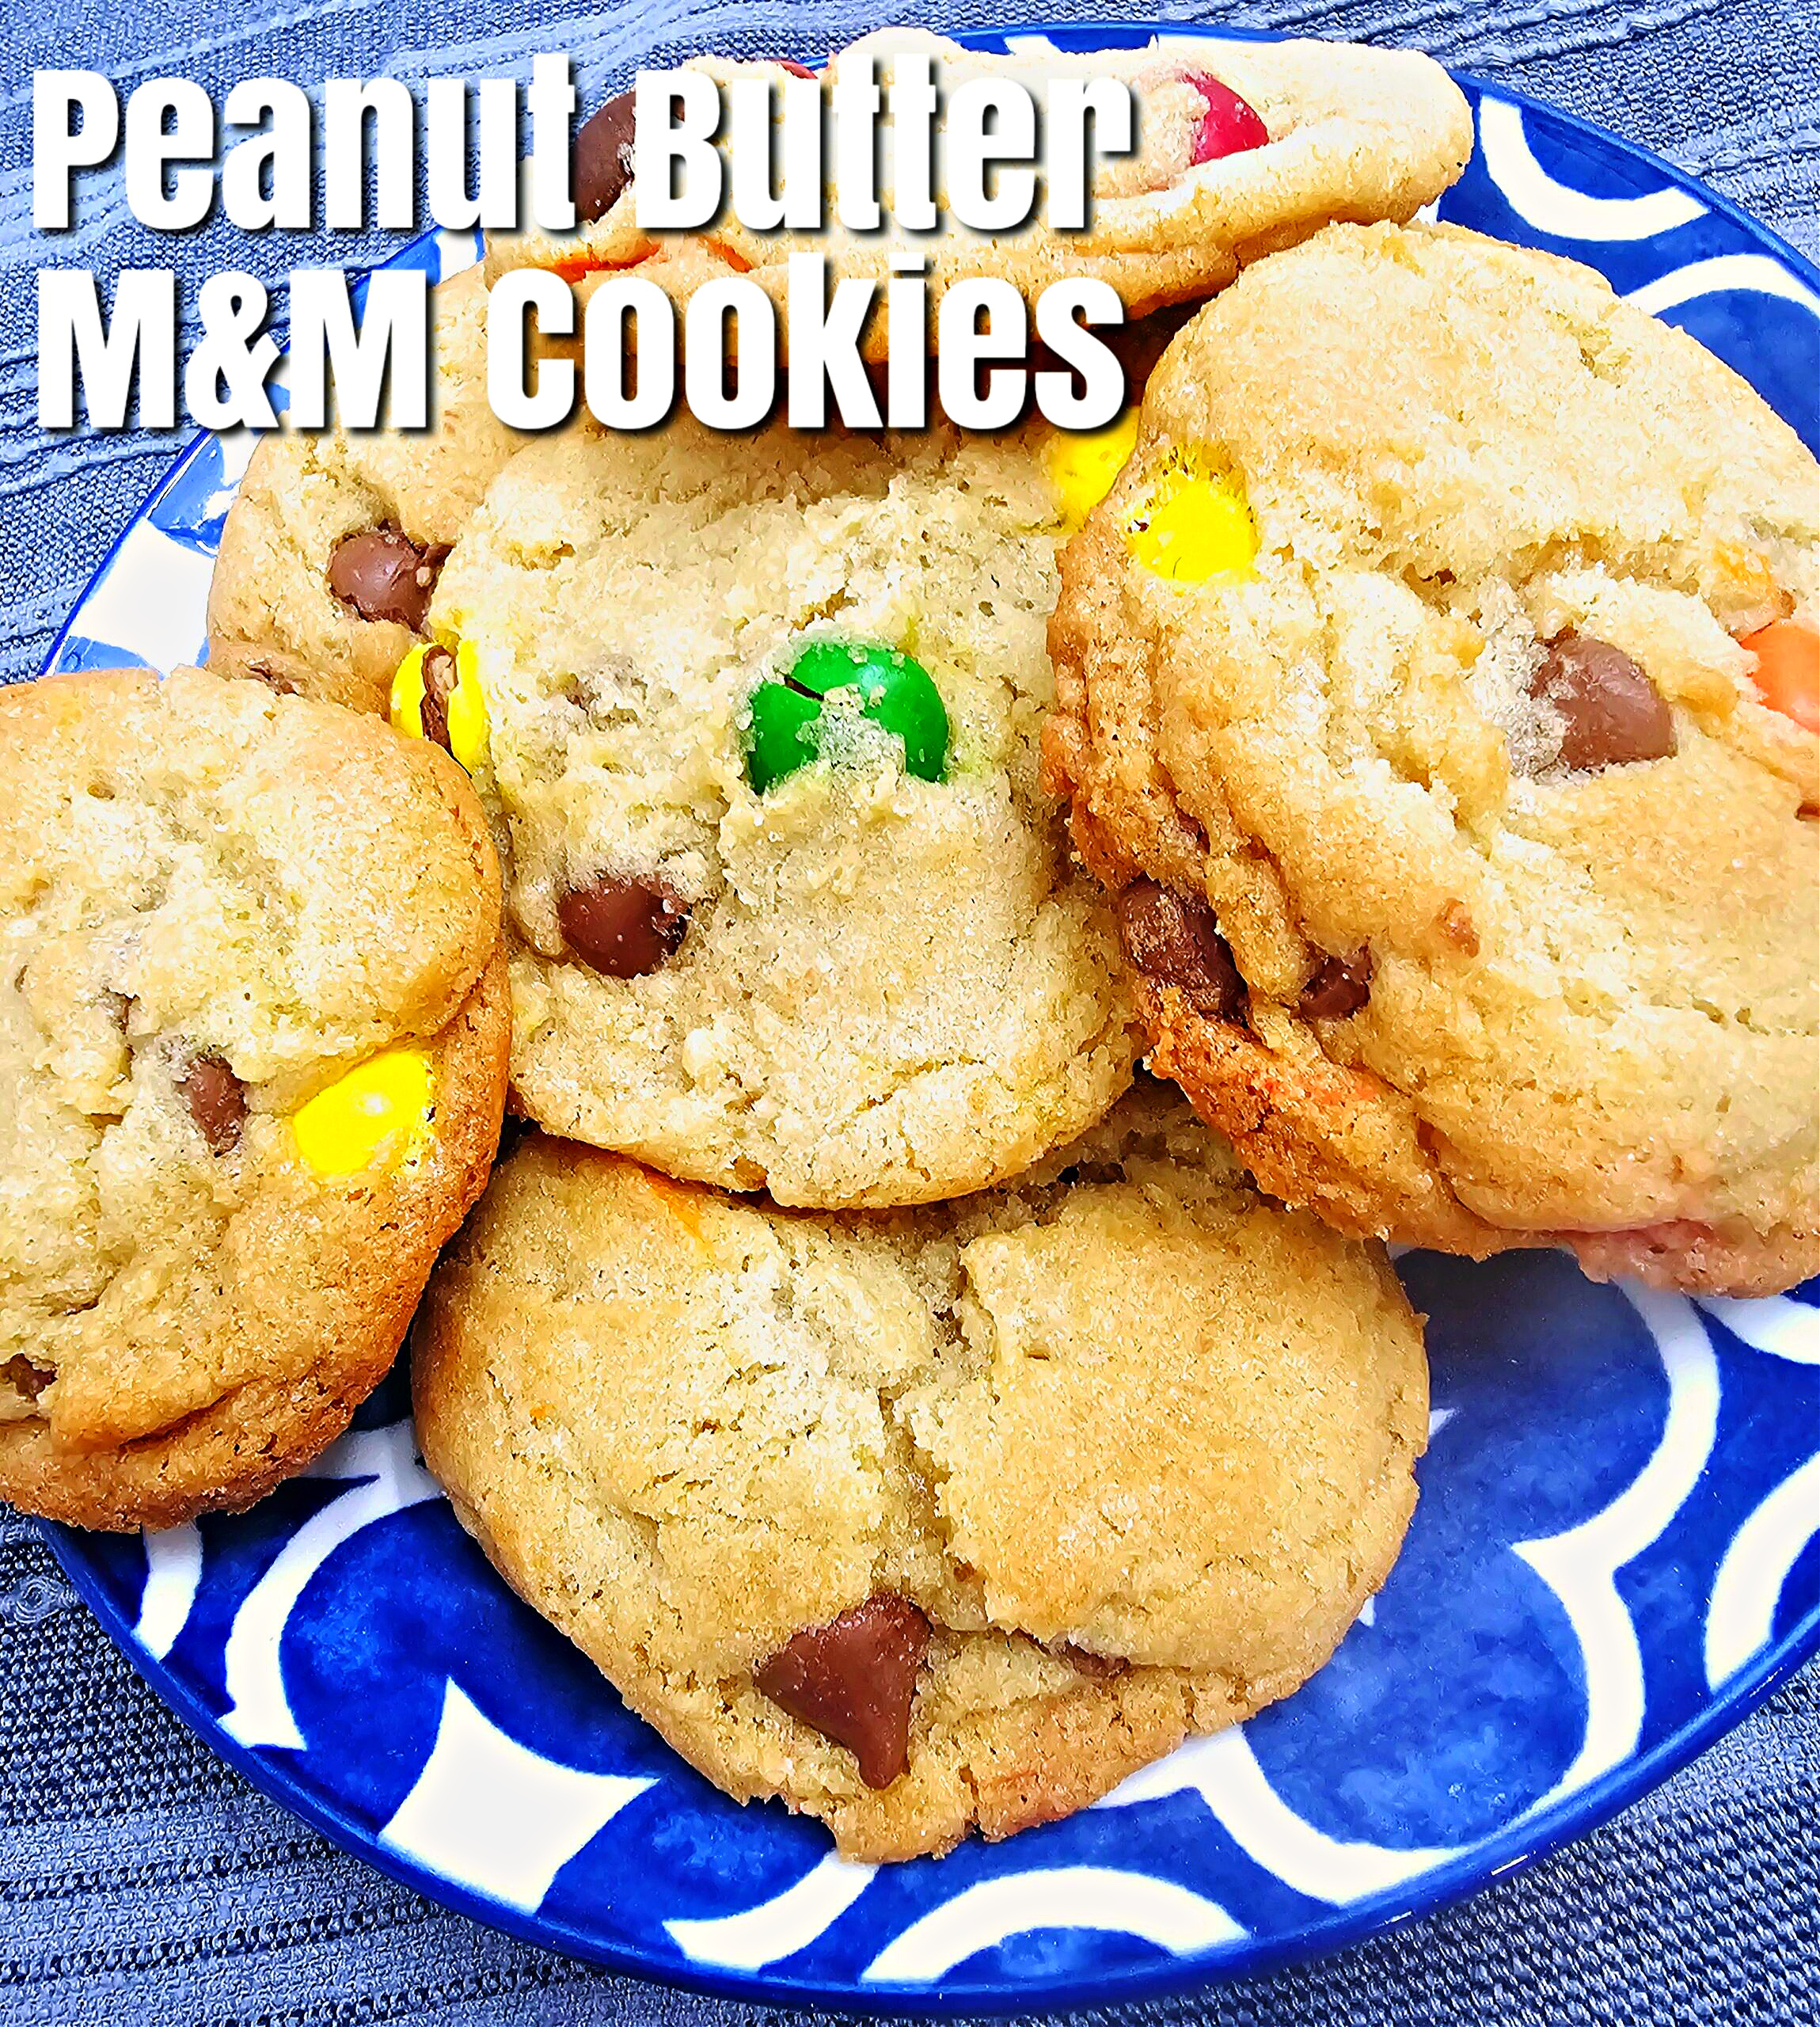 Peanut Butter M&M Cookies #peanutbutter #m&m's #cookies #chocolate #dessert #afterschoolsnack